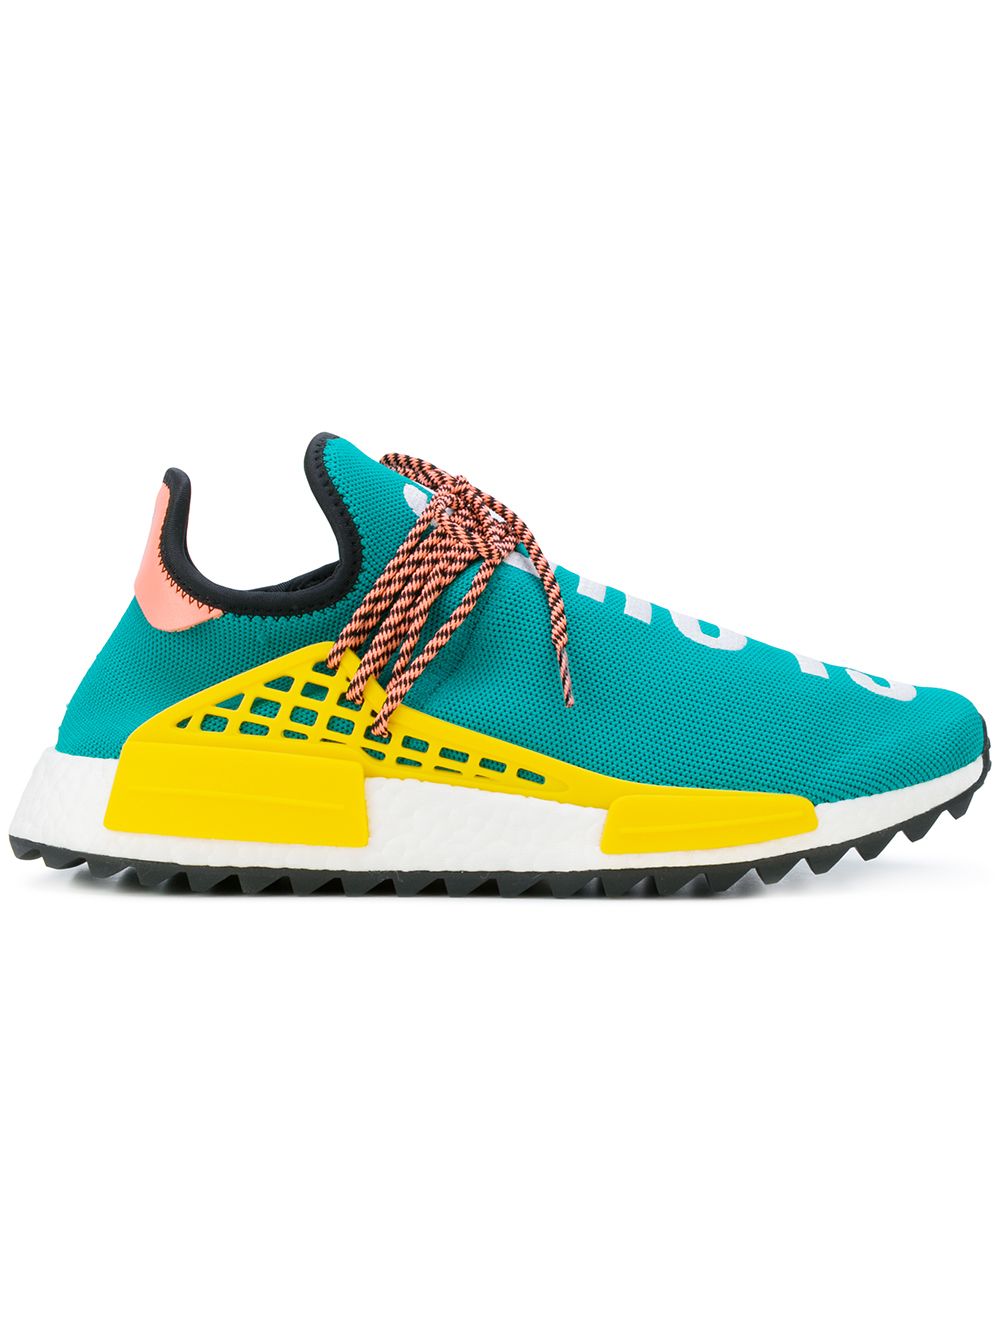 adidas x Pharrell Williams Human Race NMD TR "Sun Glow" sneakers - Green von adidas